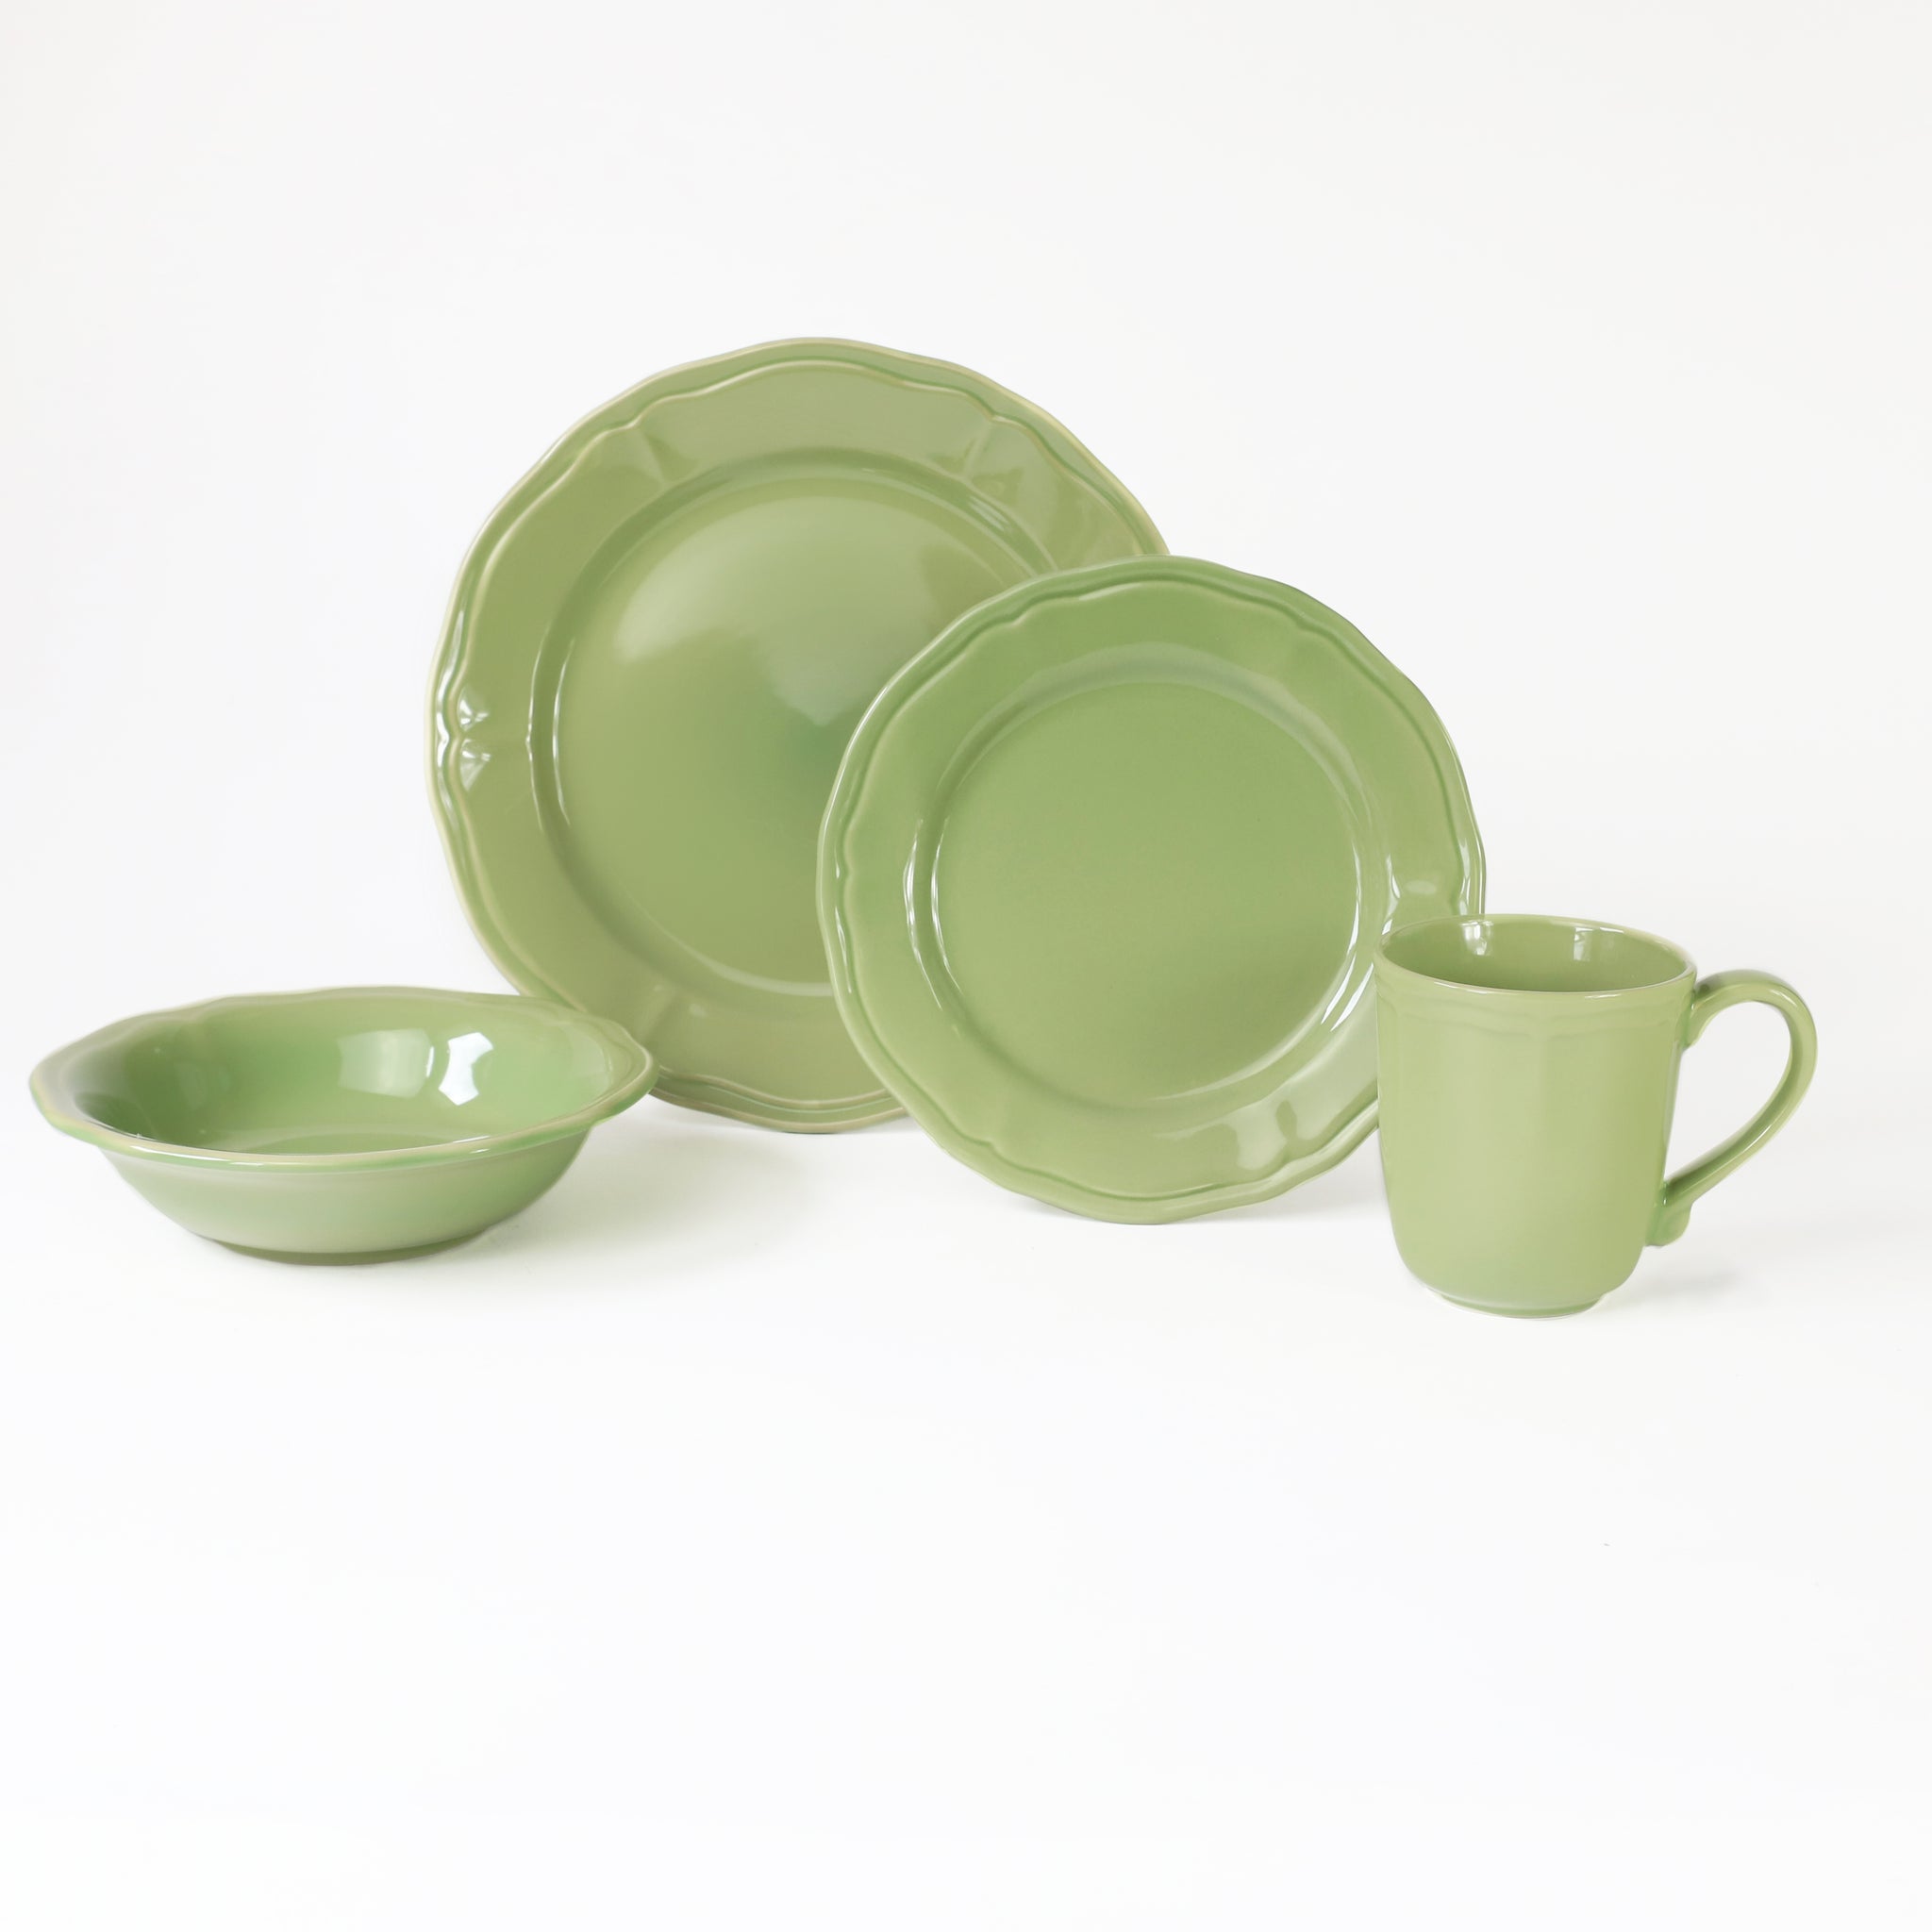 Siena 16 piece Dinnerware Set Green - Euro Ceramica 